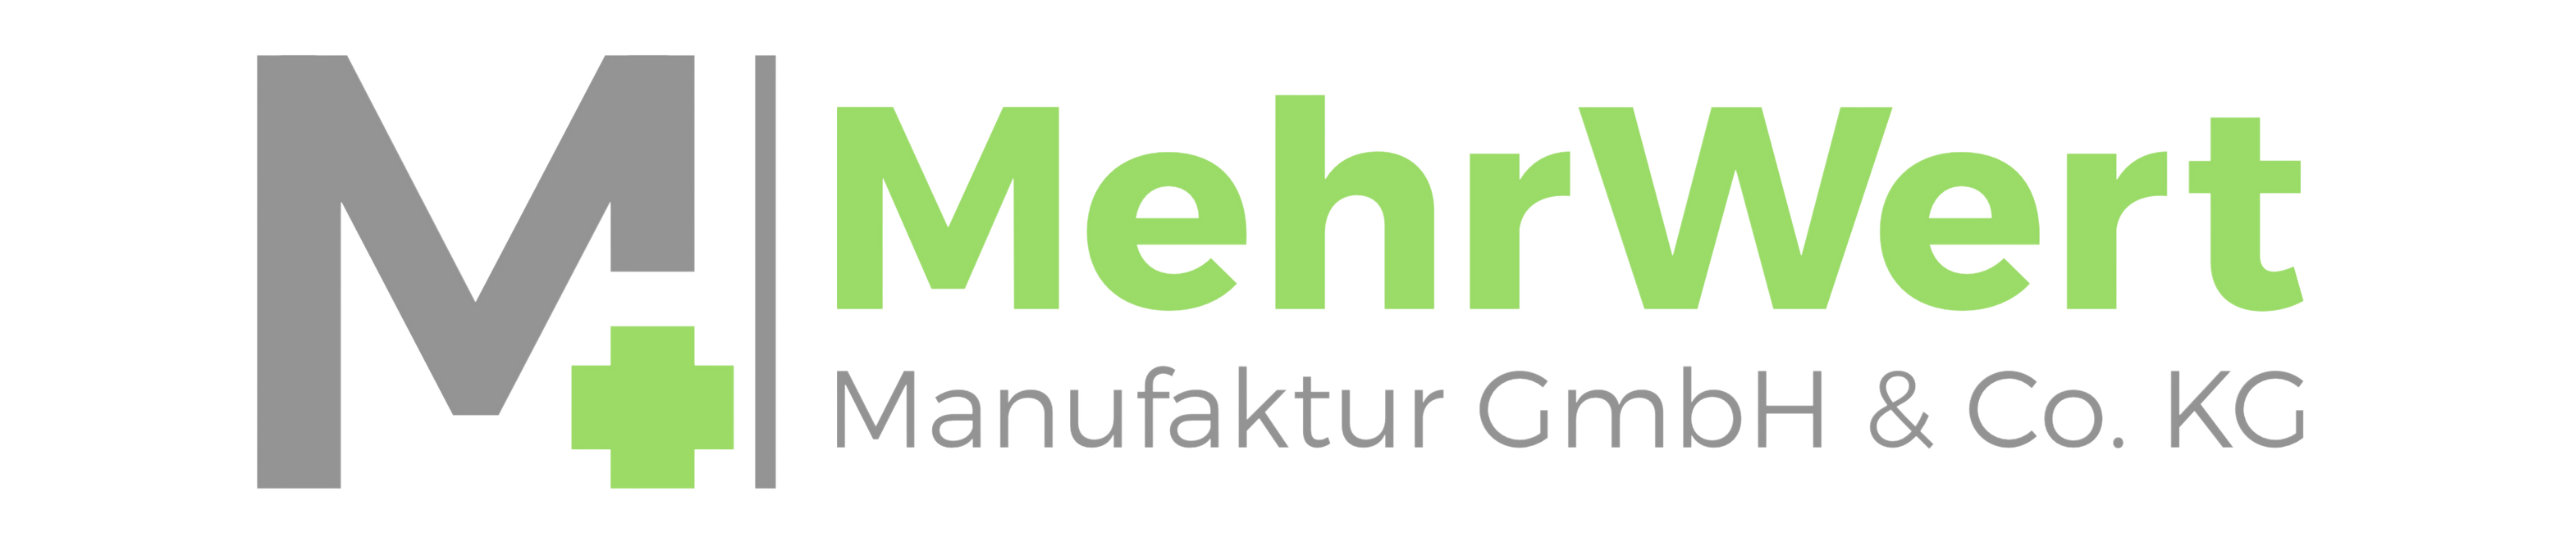 MehrWertManufaktur GmbH & Co. KG